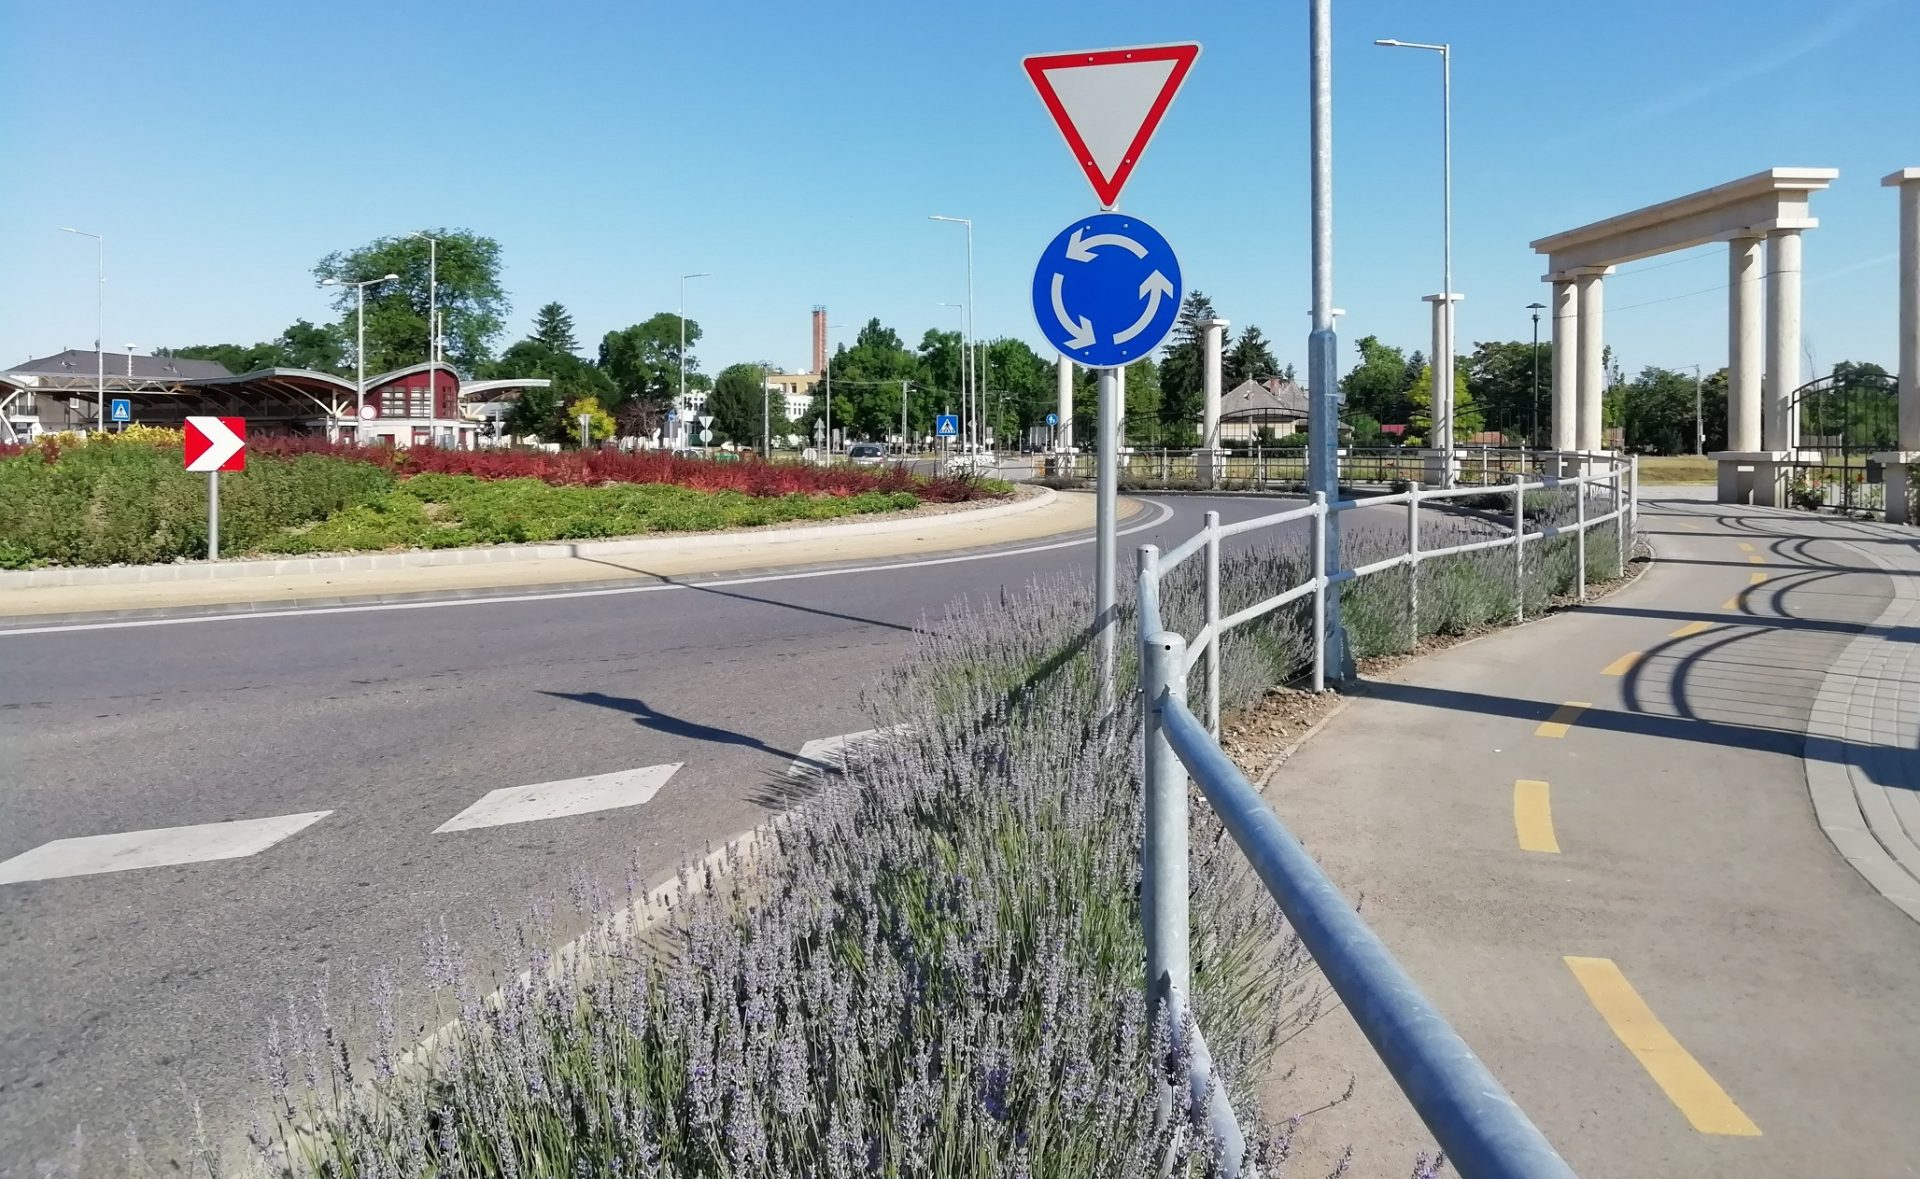 The center of Tiszaföldvár has become safer for transportation